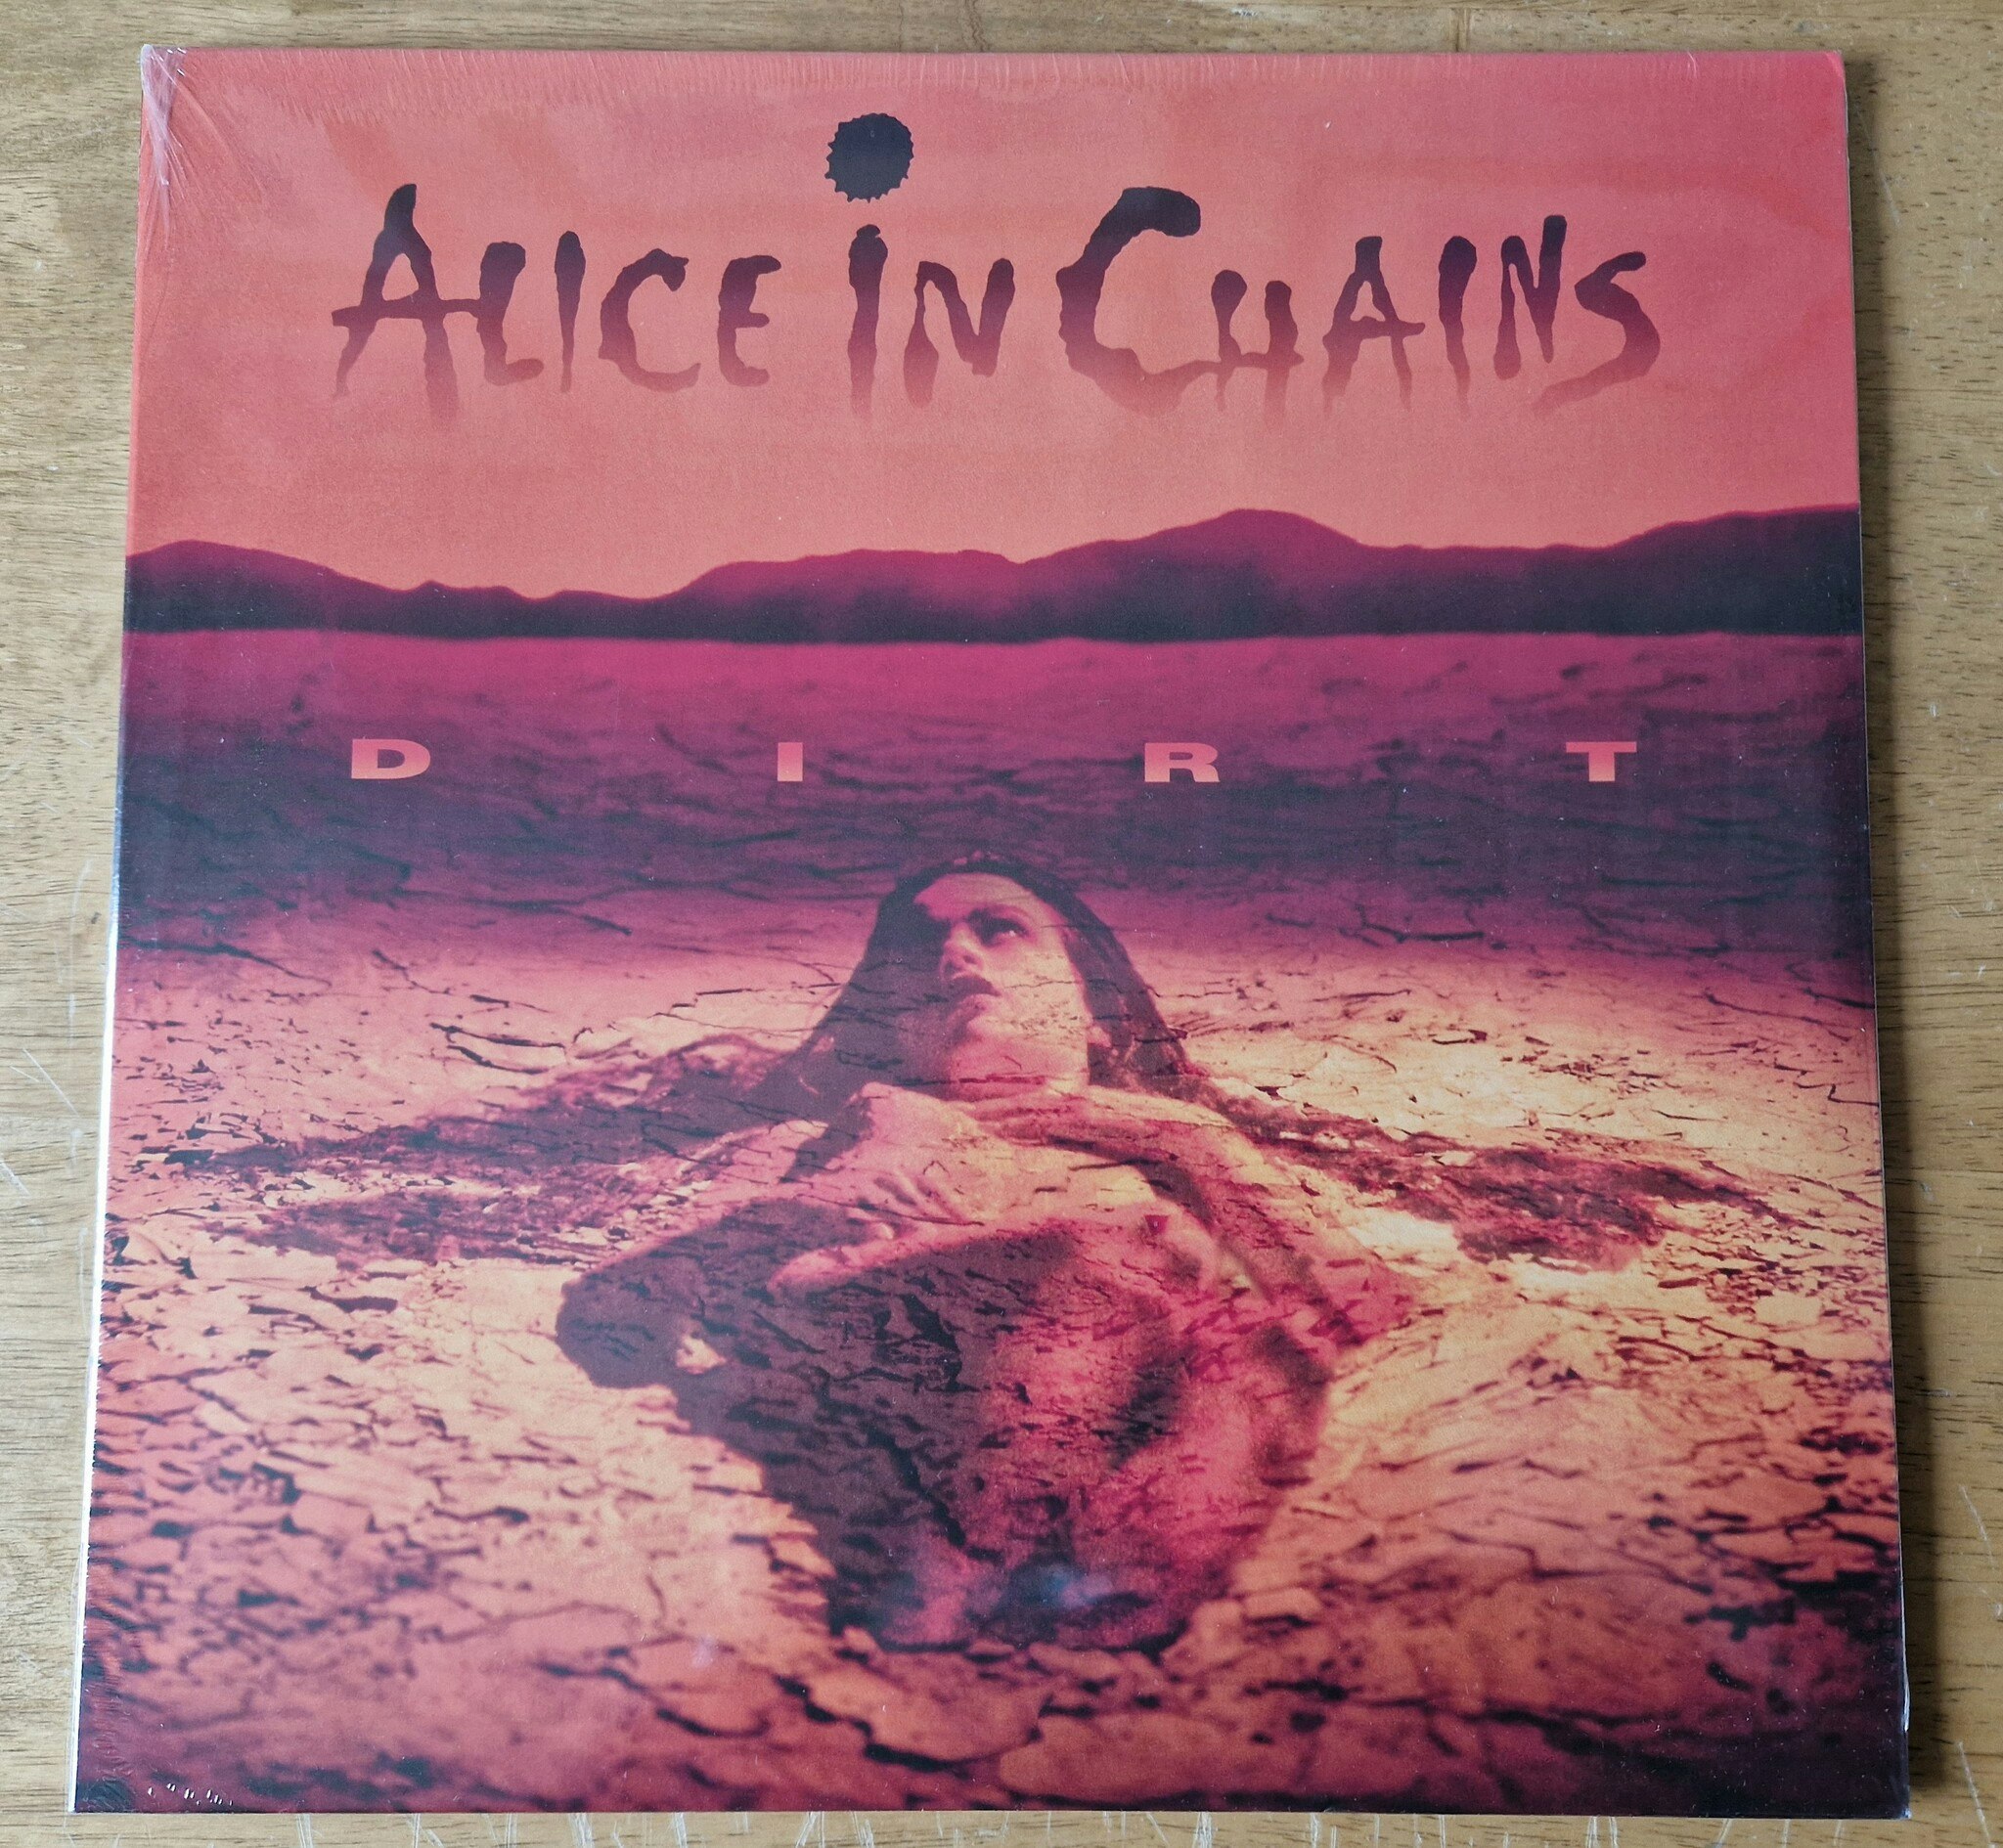 Alice in chains, Dirt. Vinyl 2LP